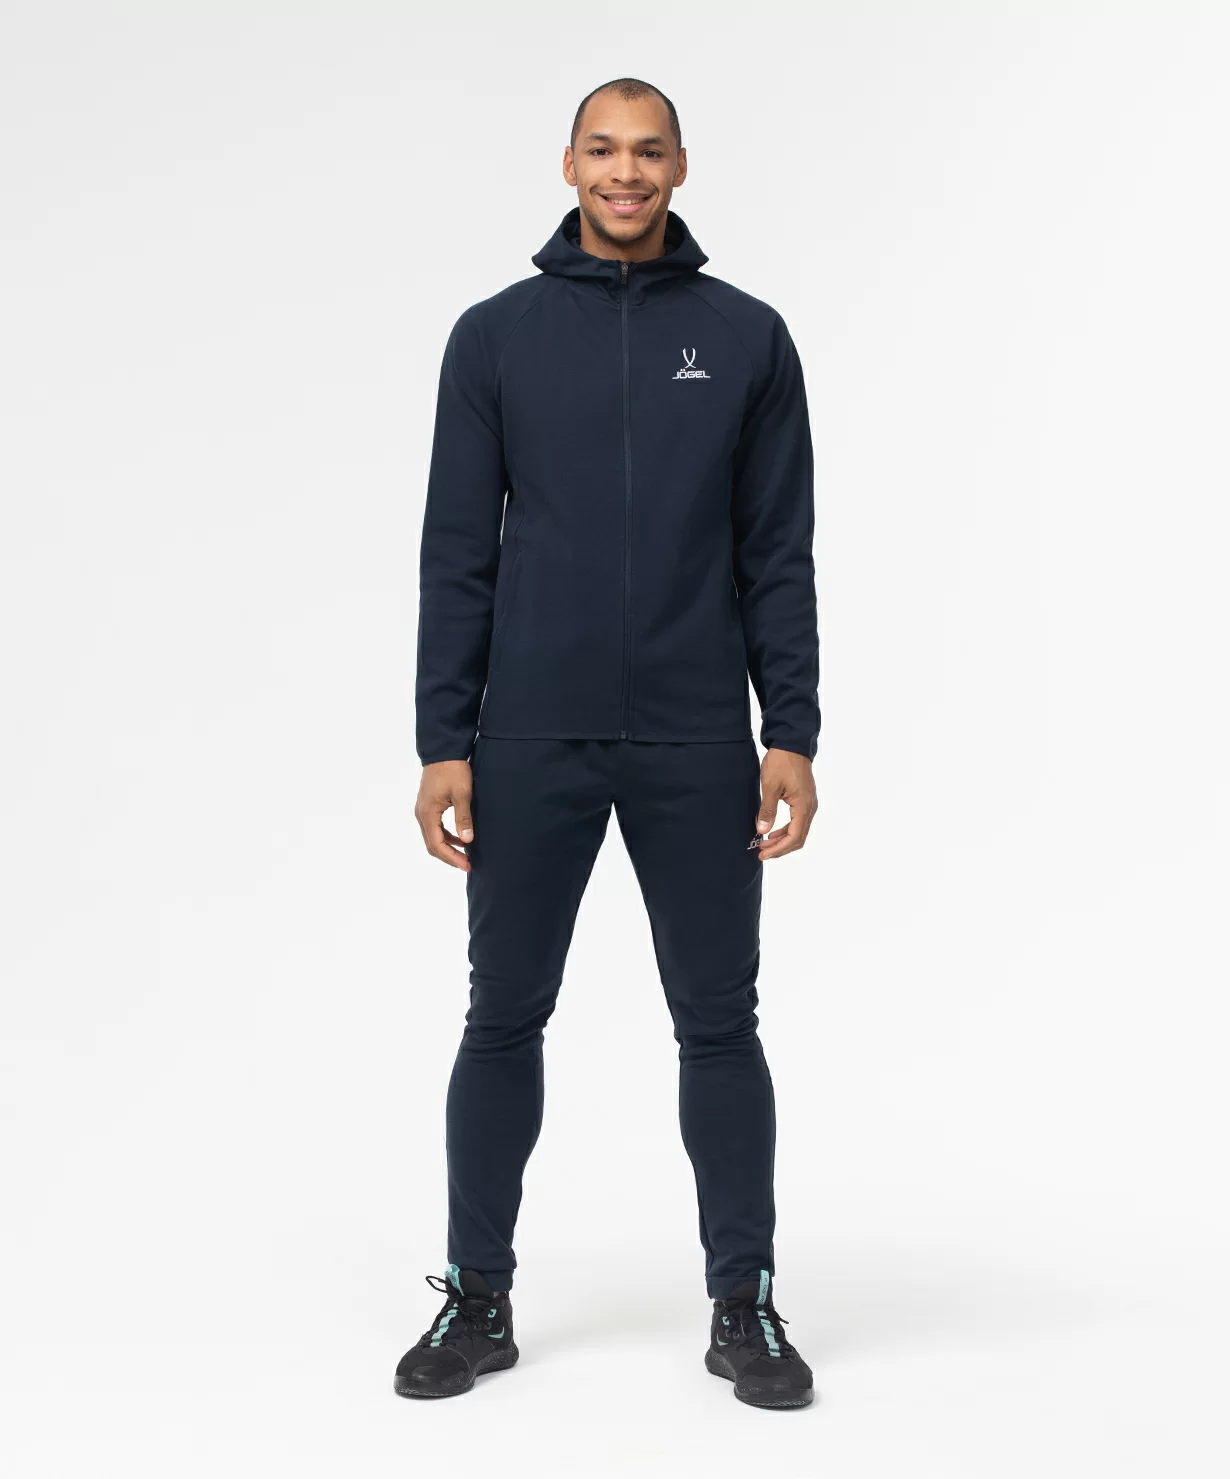 Реальное фото Олимпийка с капюшоном ESSENTIAL Athlete Jacket FZ, темно-синий от магазина СпортСЕ